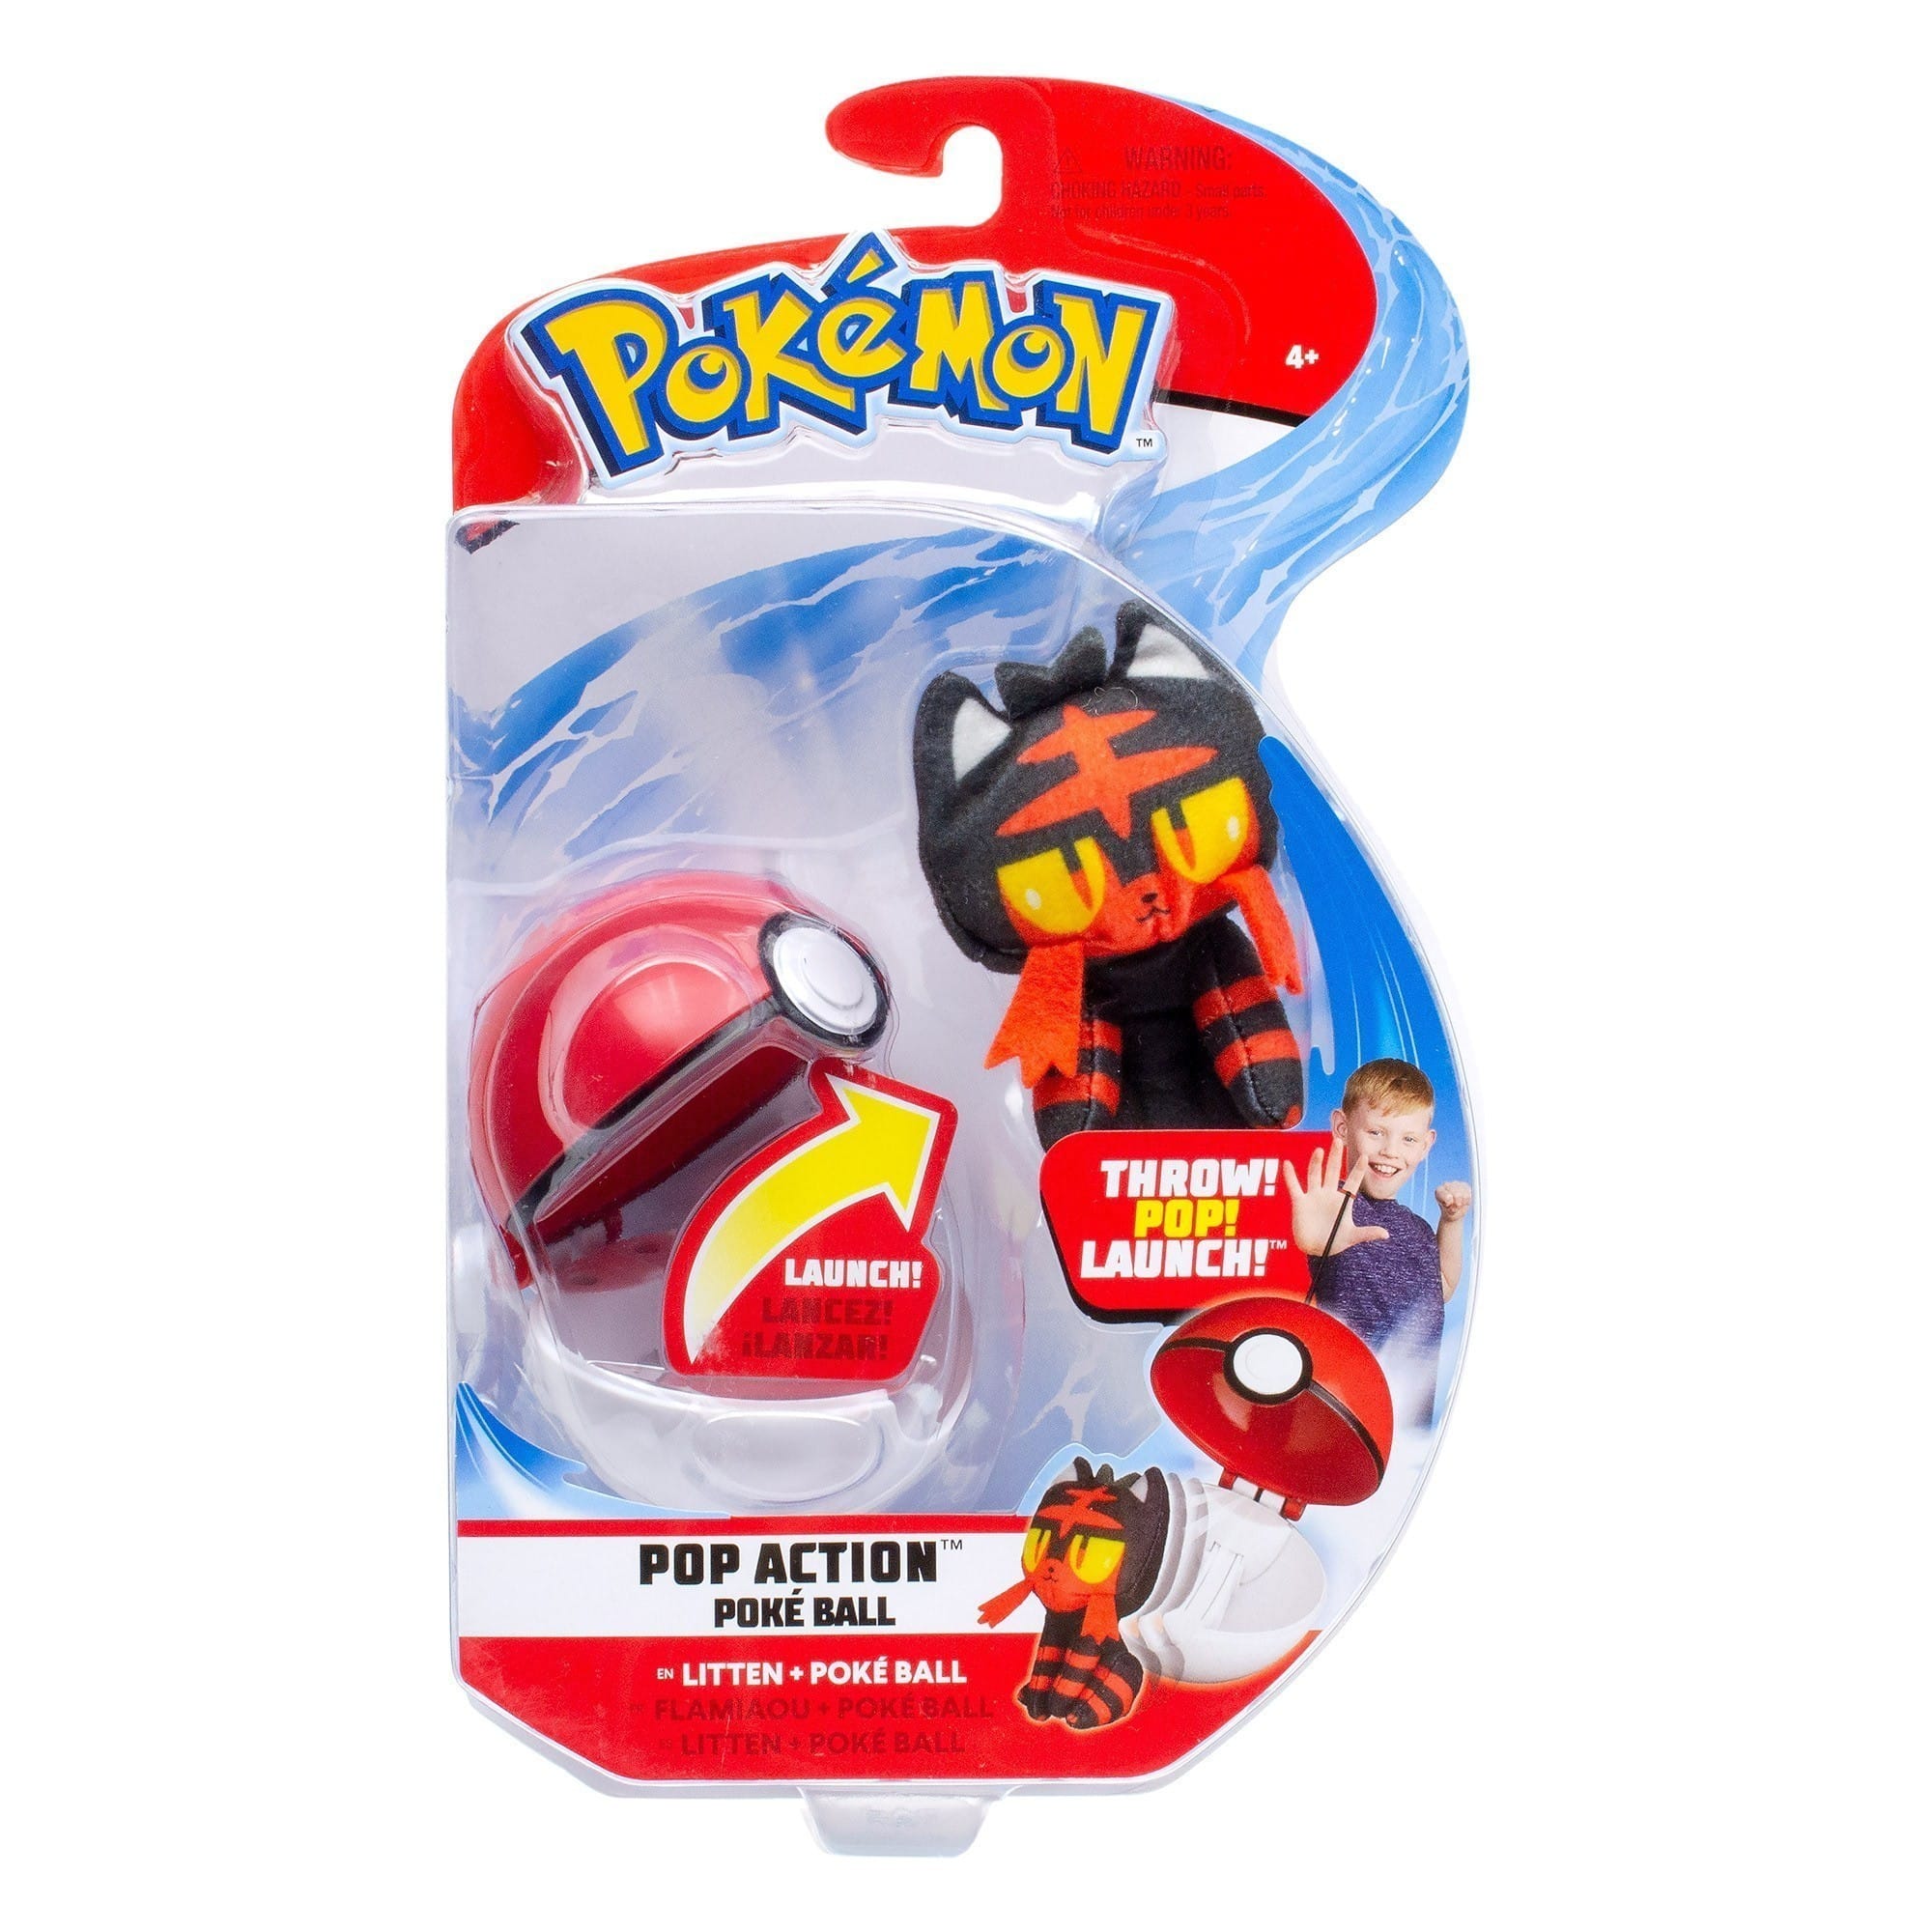 Pokémon - Pop Action Poké Ball - Litten Poke Ball